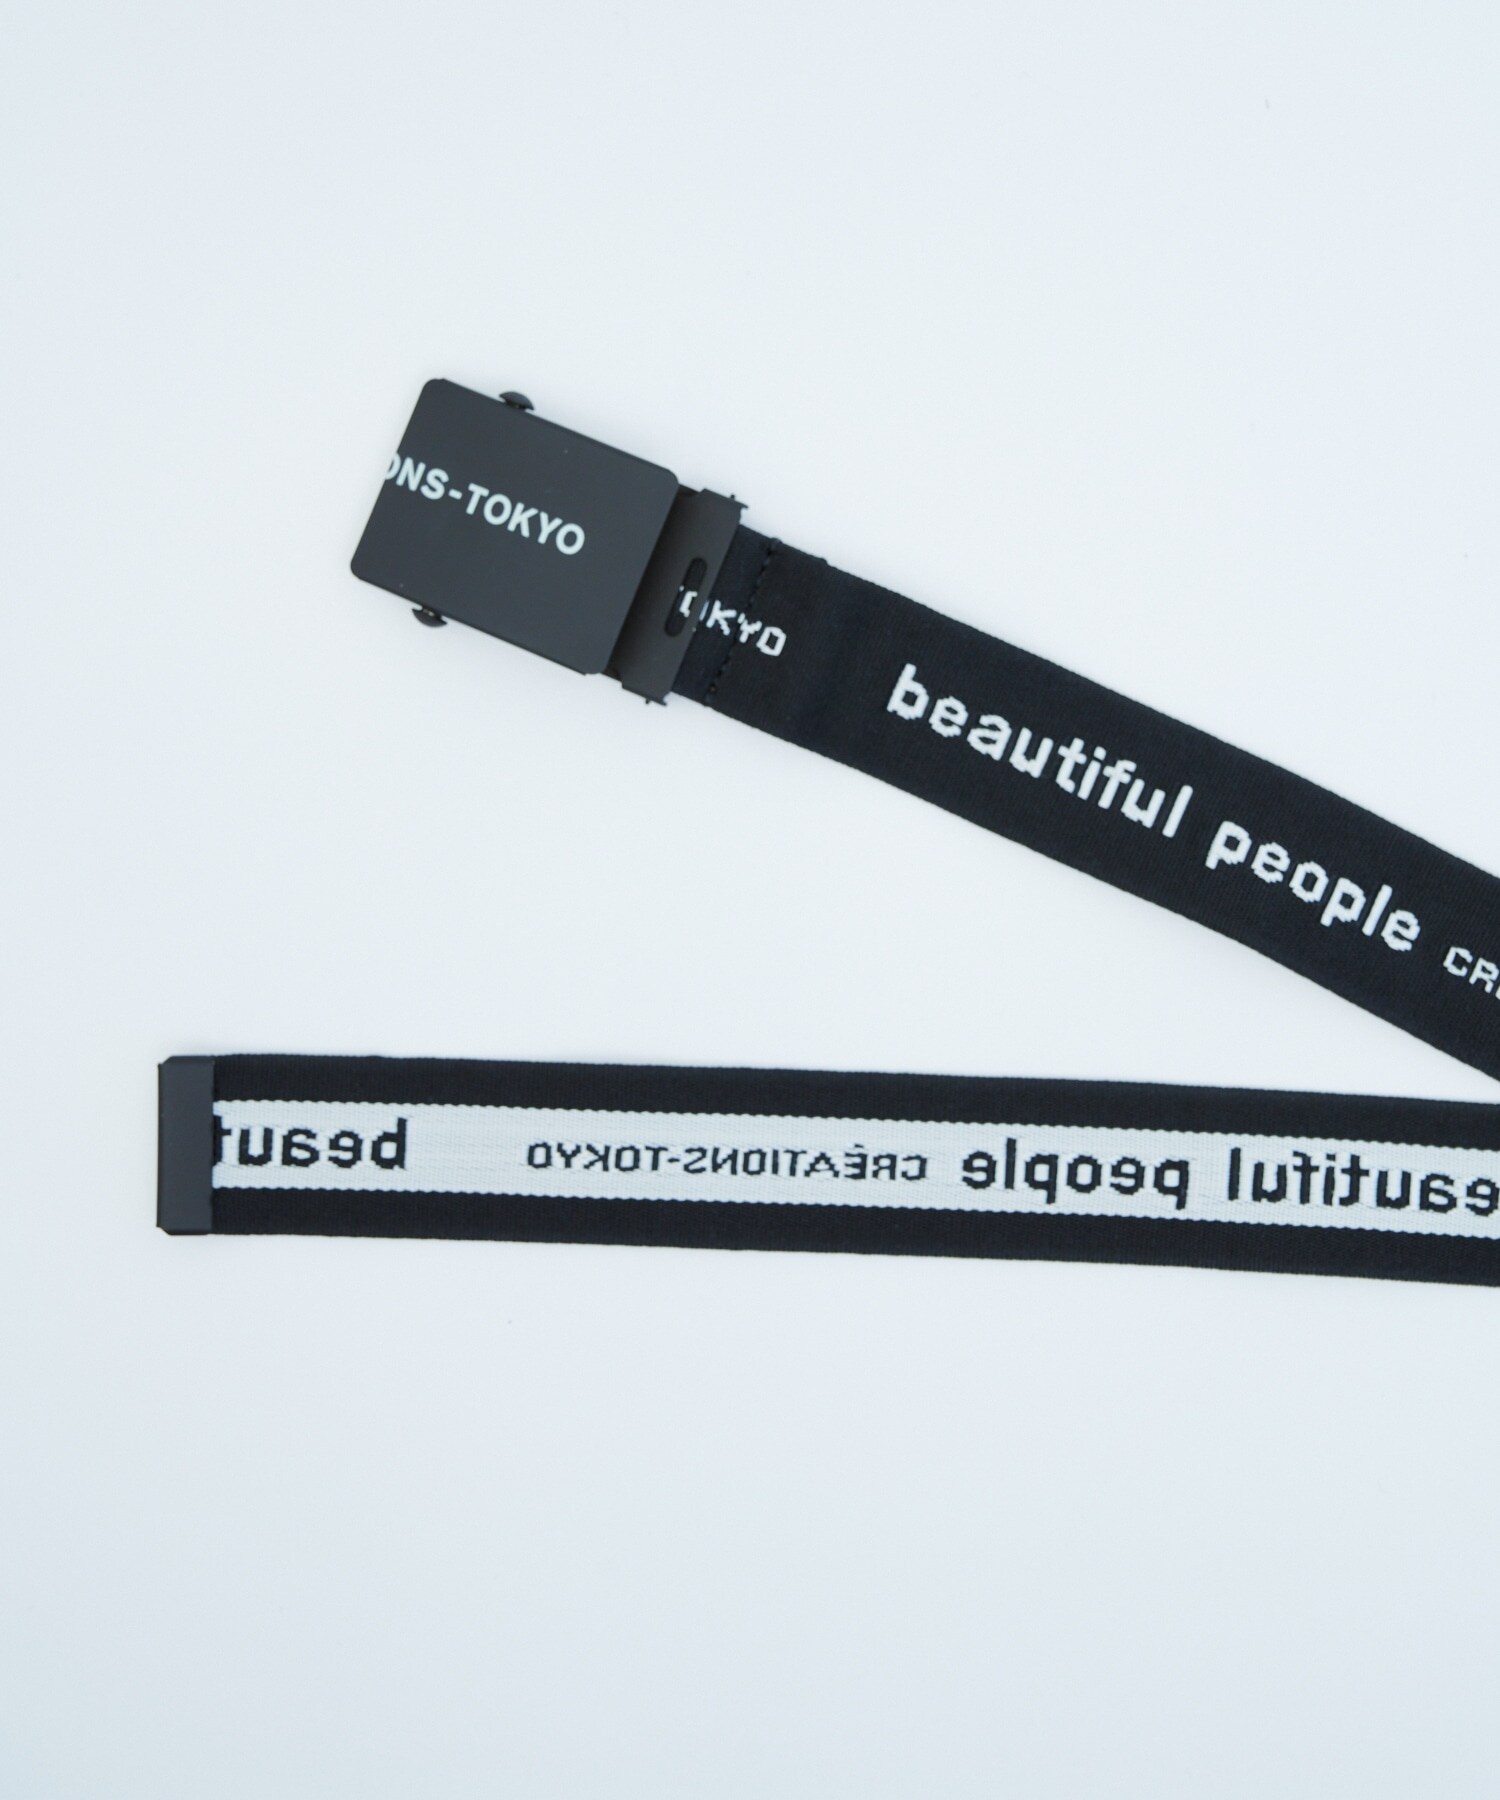 logo buckle belt in jacquard beautiful people